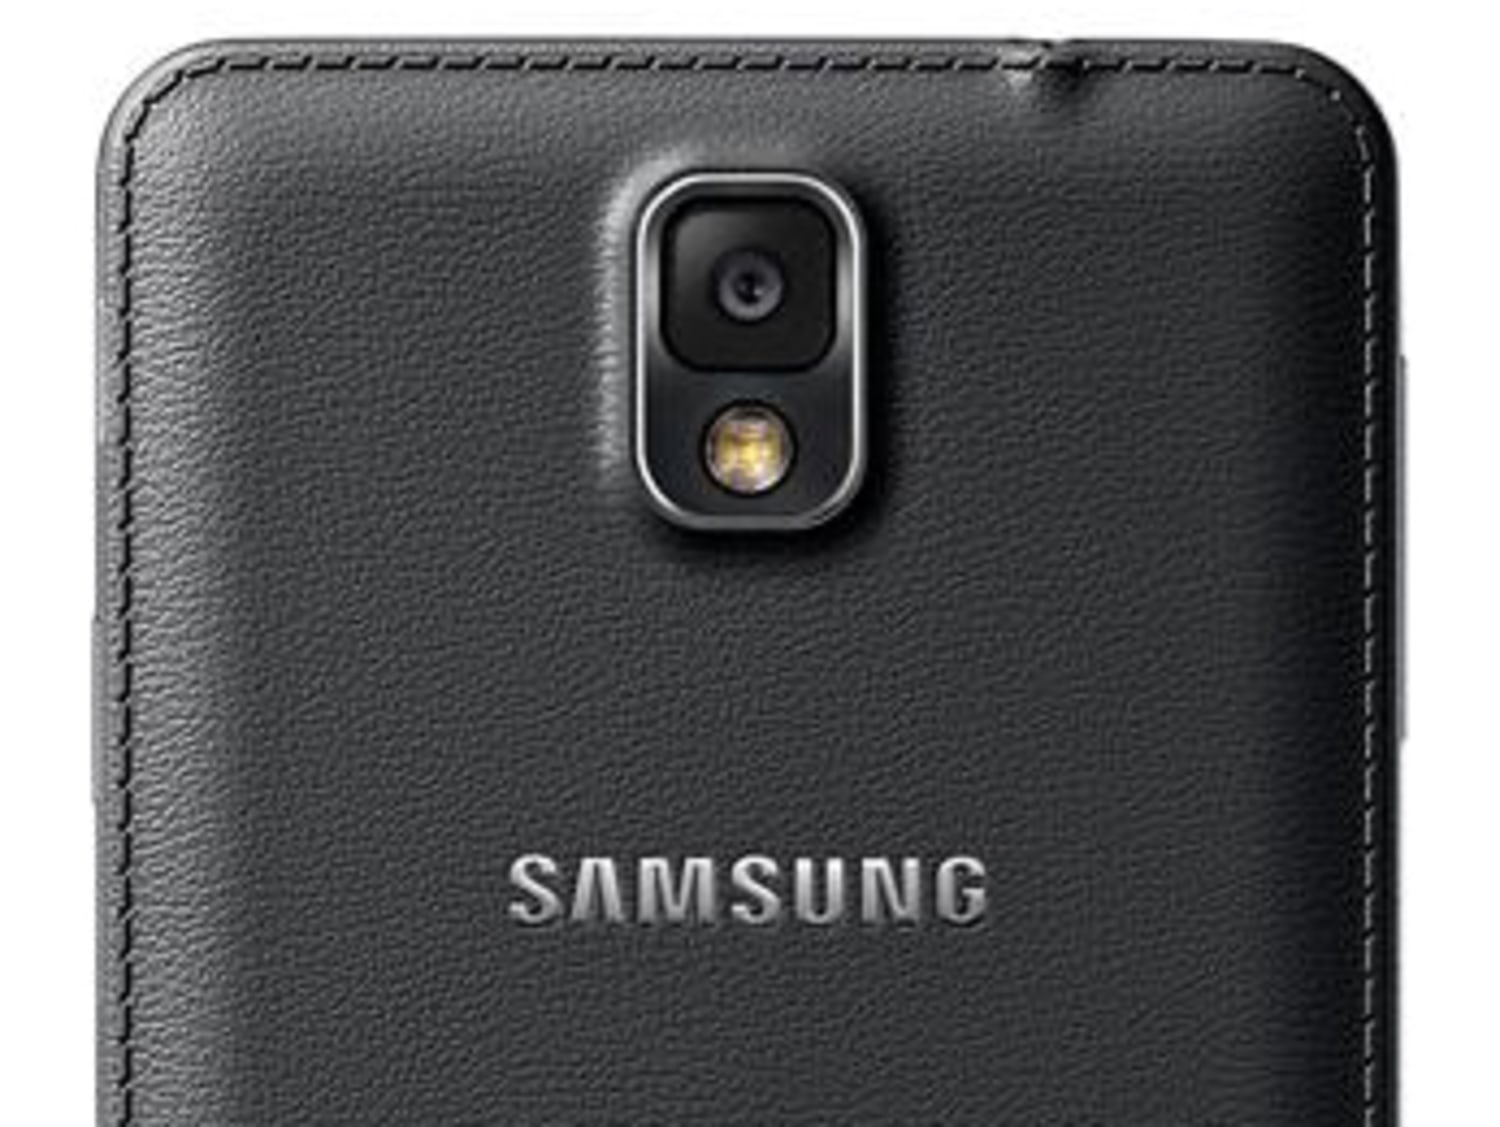 Specialiteit Kliniek Historicus New Samsung Galaxy Note 3 phablet has 5.7-inch screen